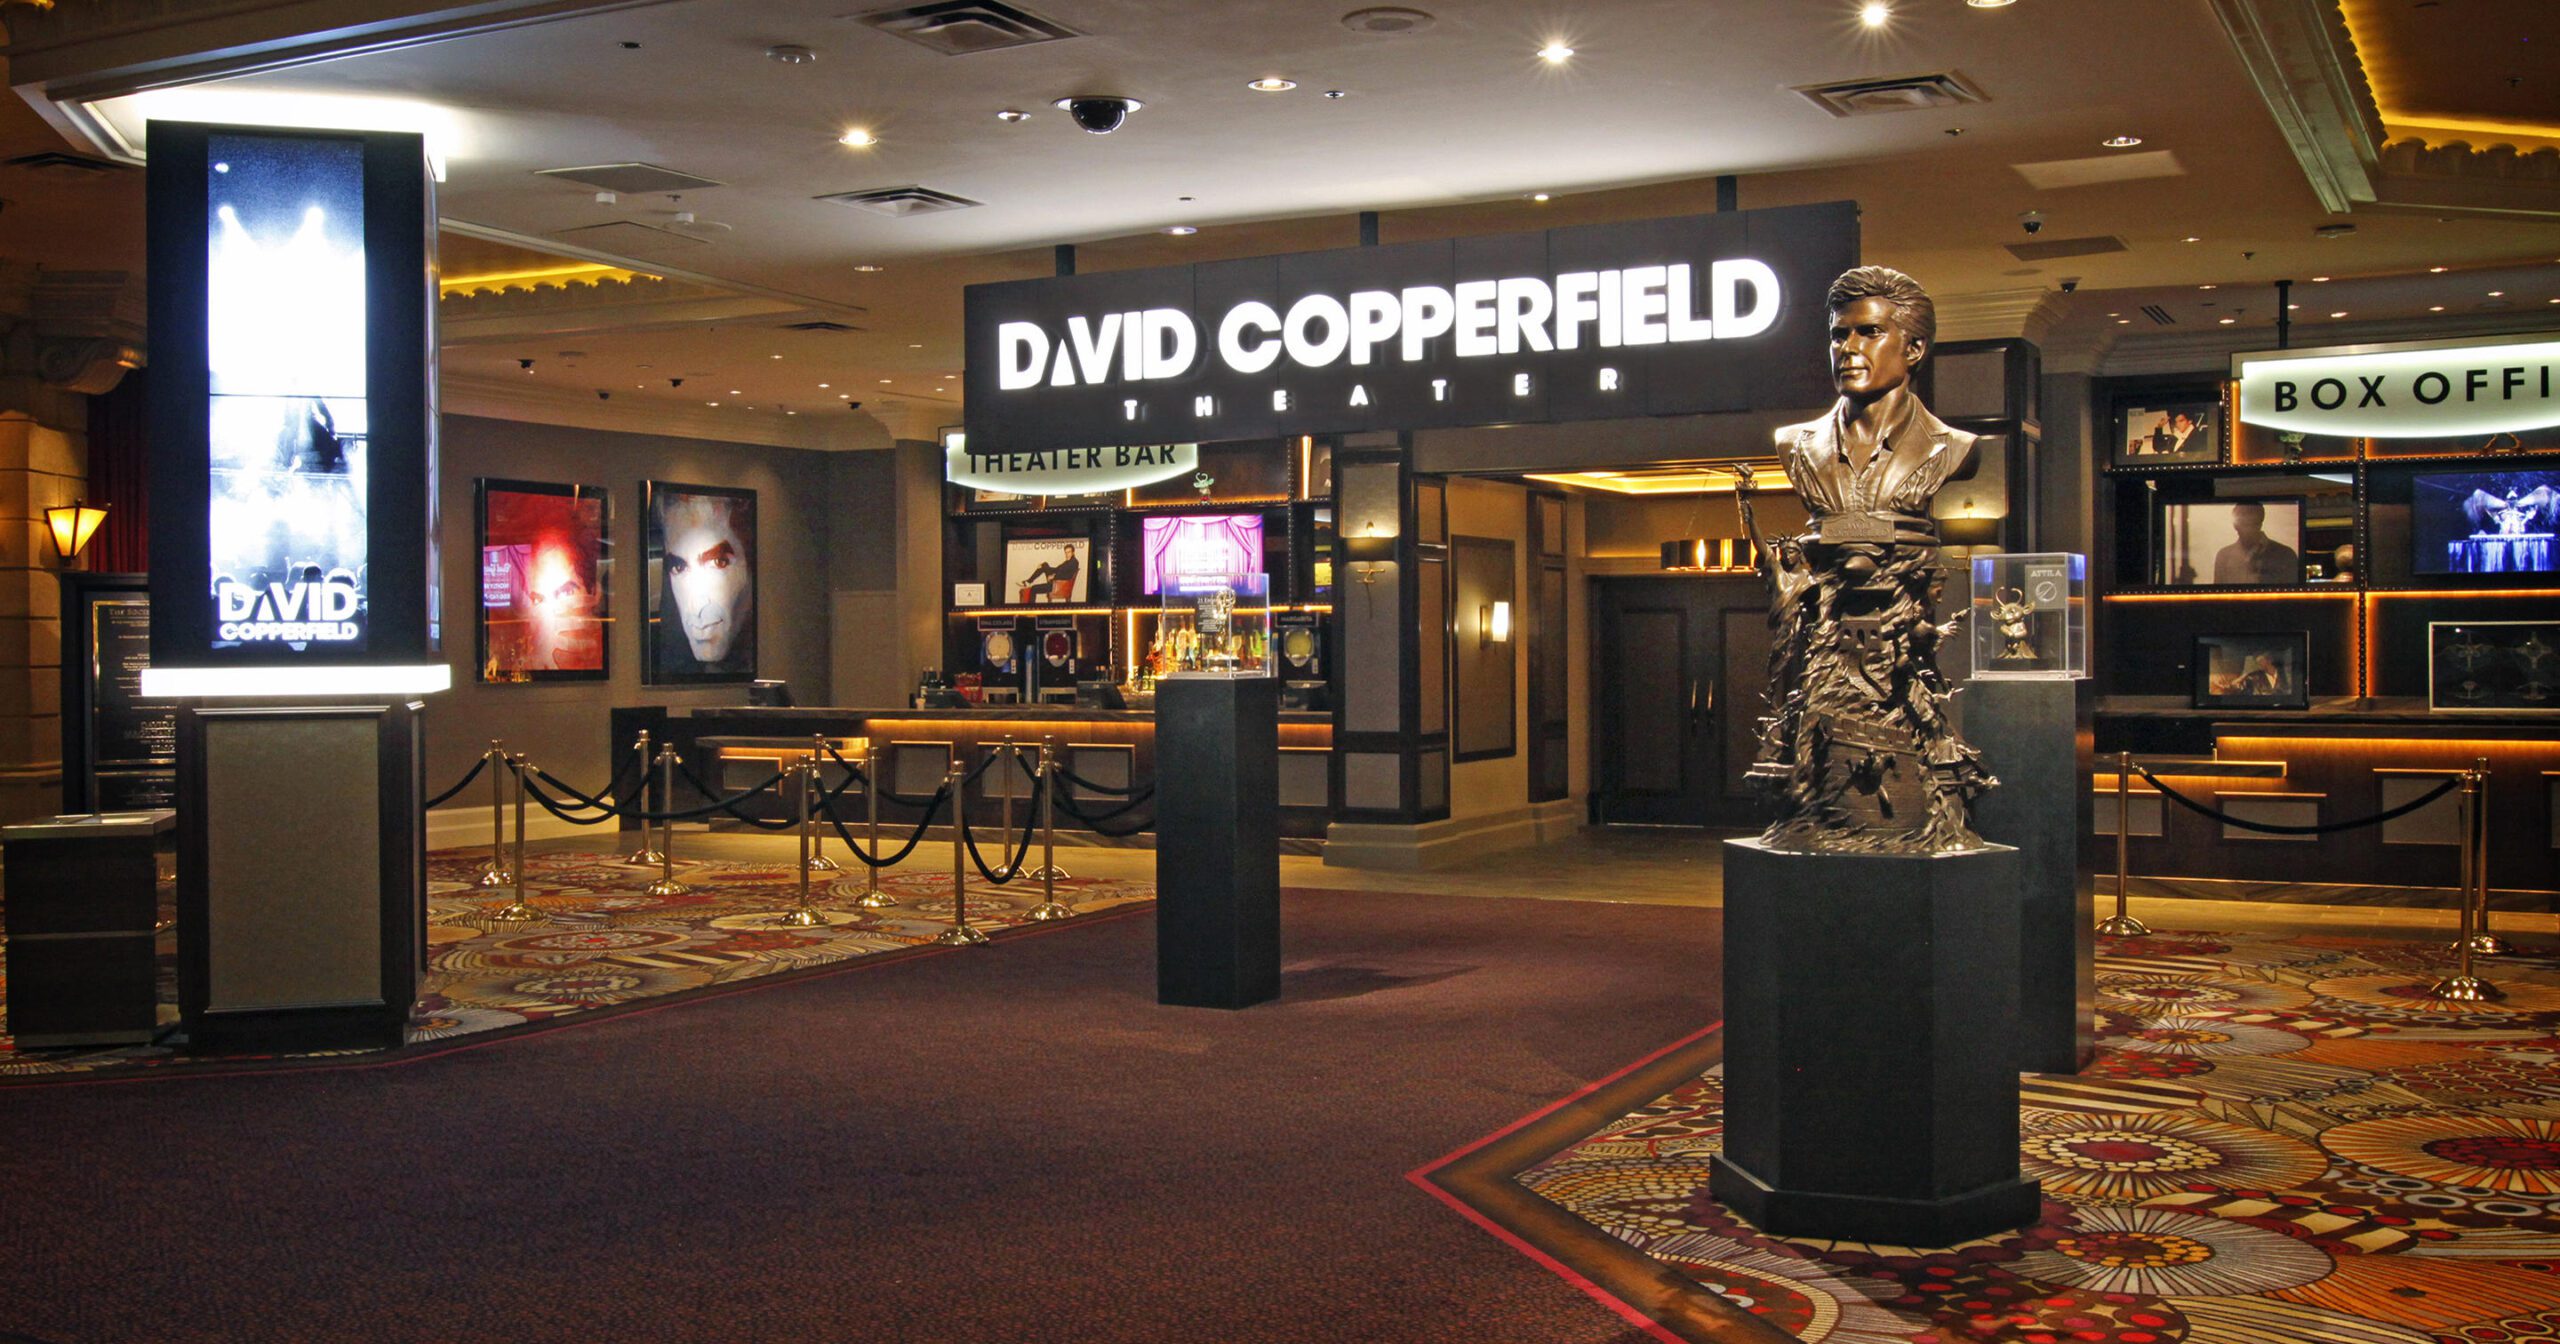 David Copperfield MGM Grand - Las Vegas hotels